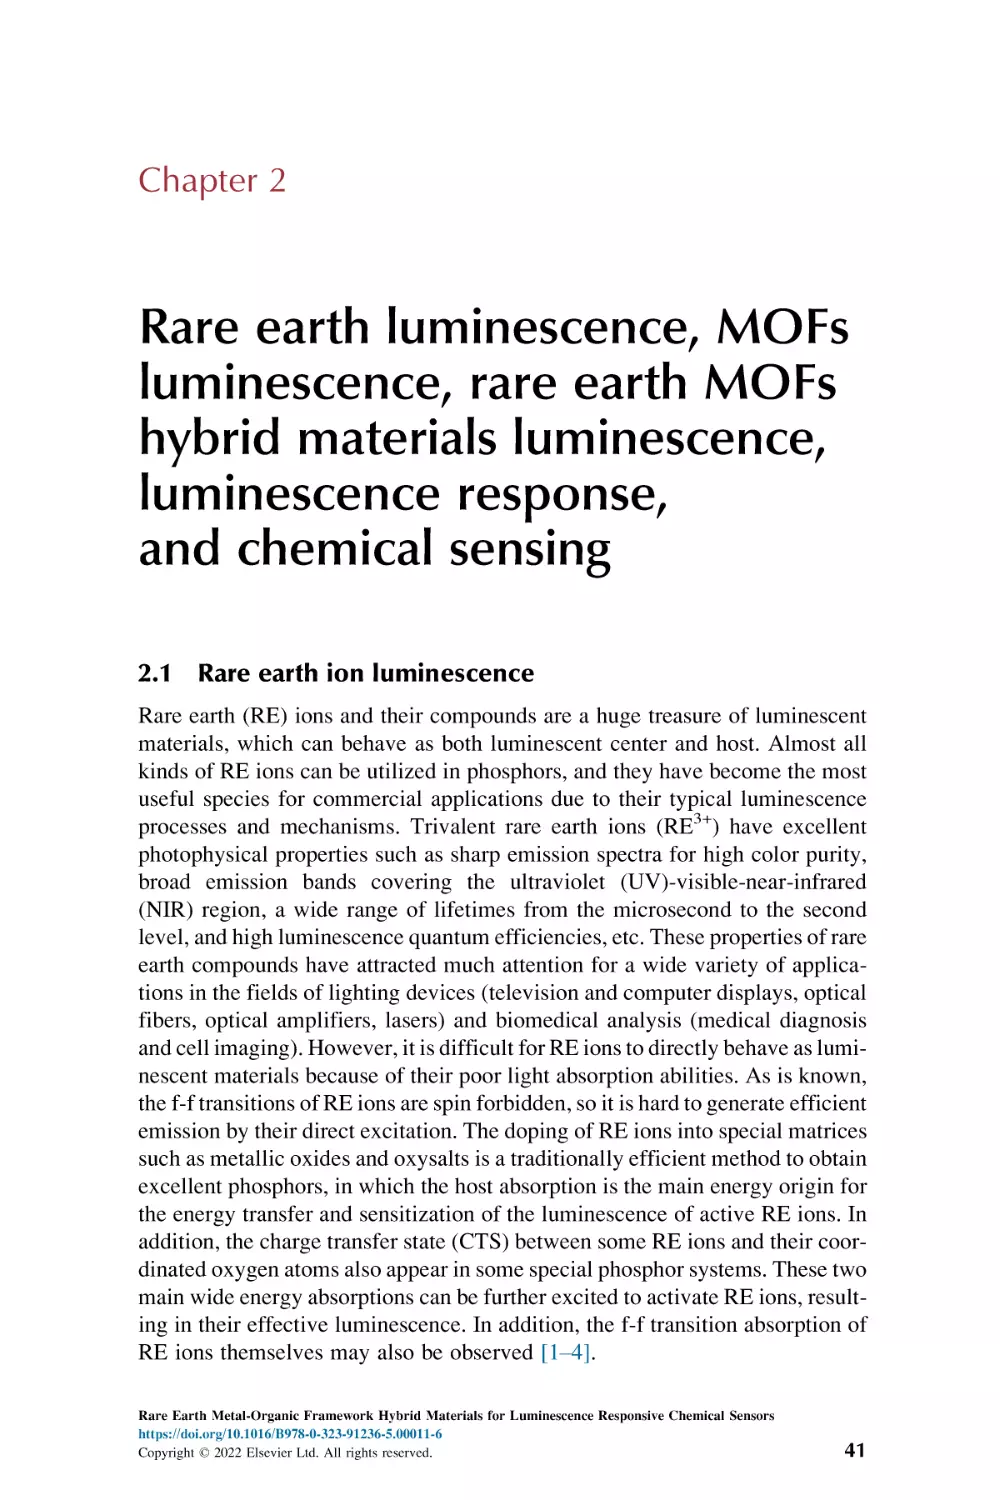 Chapter 2
2.1. Rare earth ion luminescence